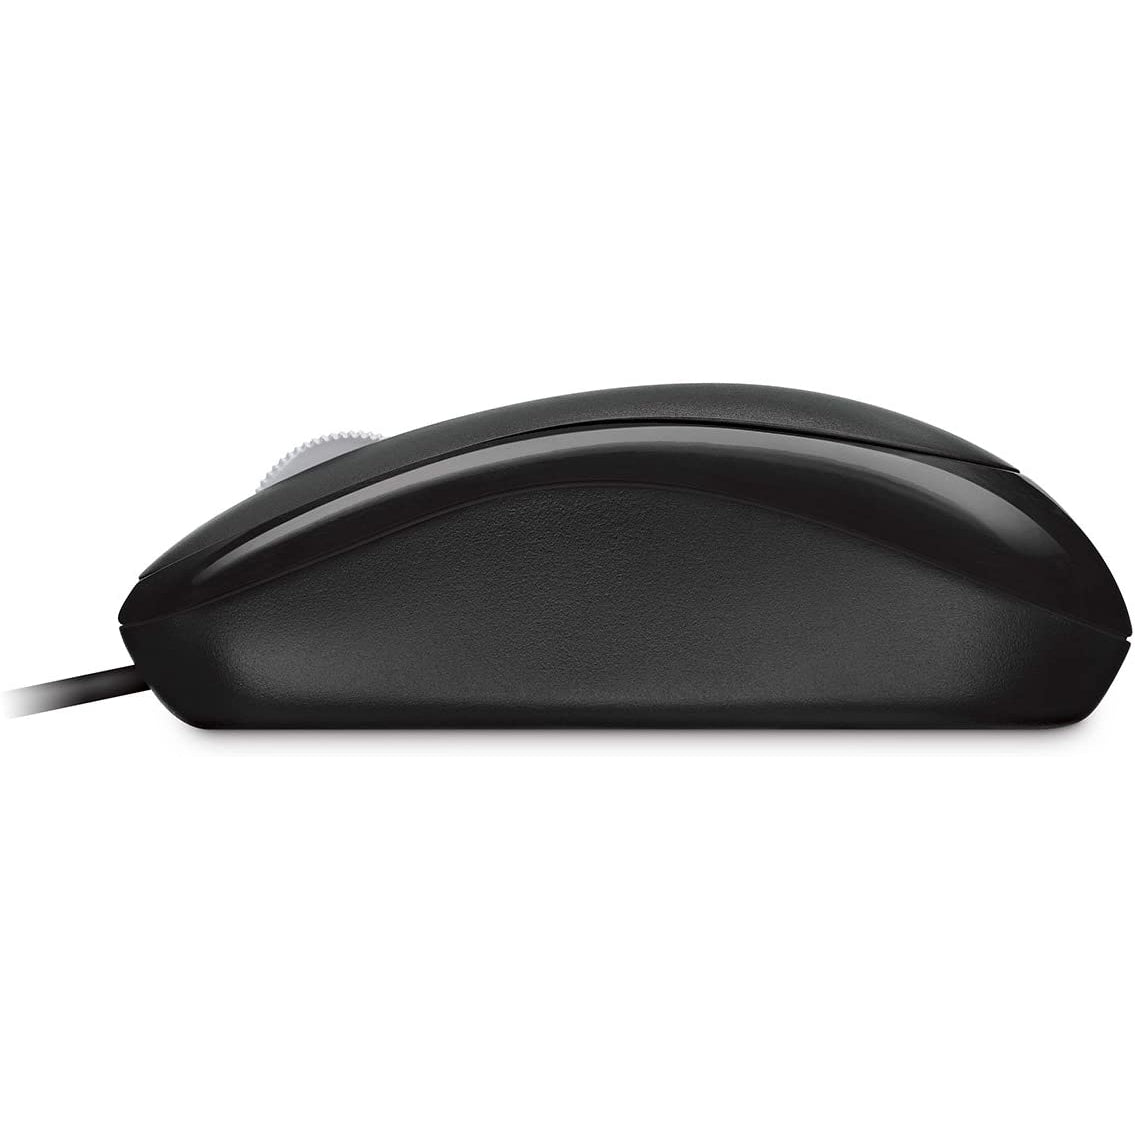 Microsoft Basic V2.0 Optical Mouse, Black